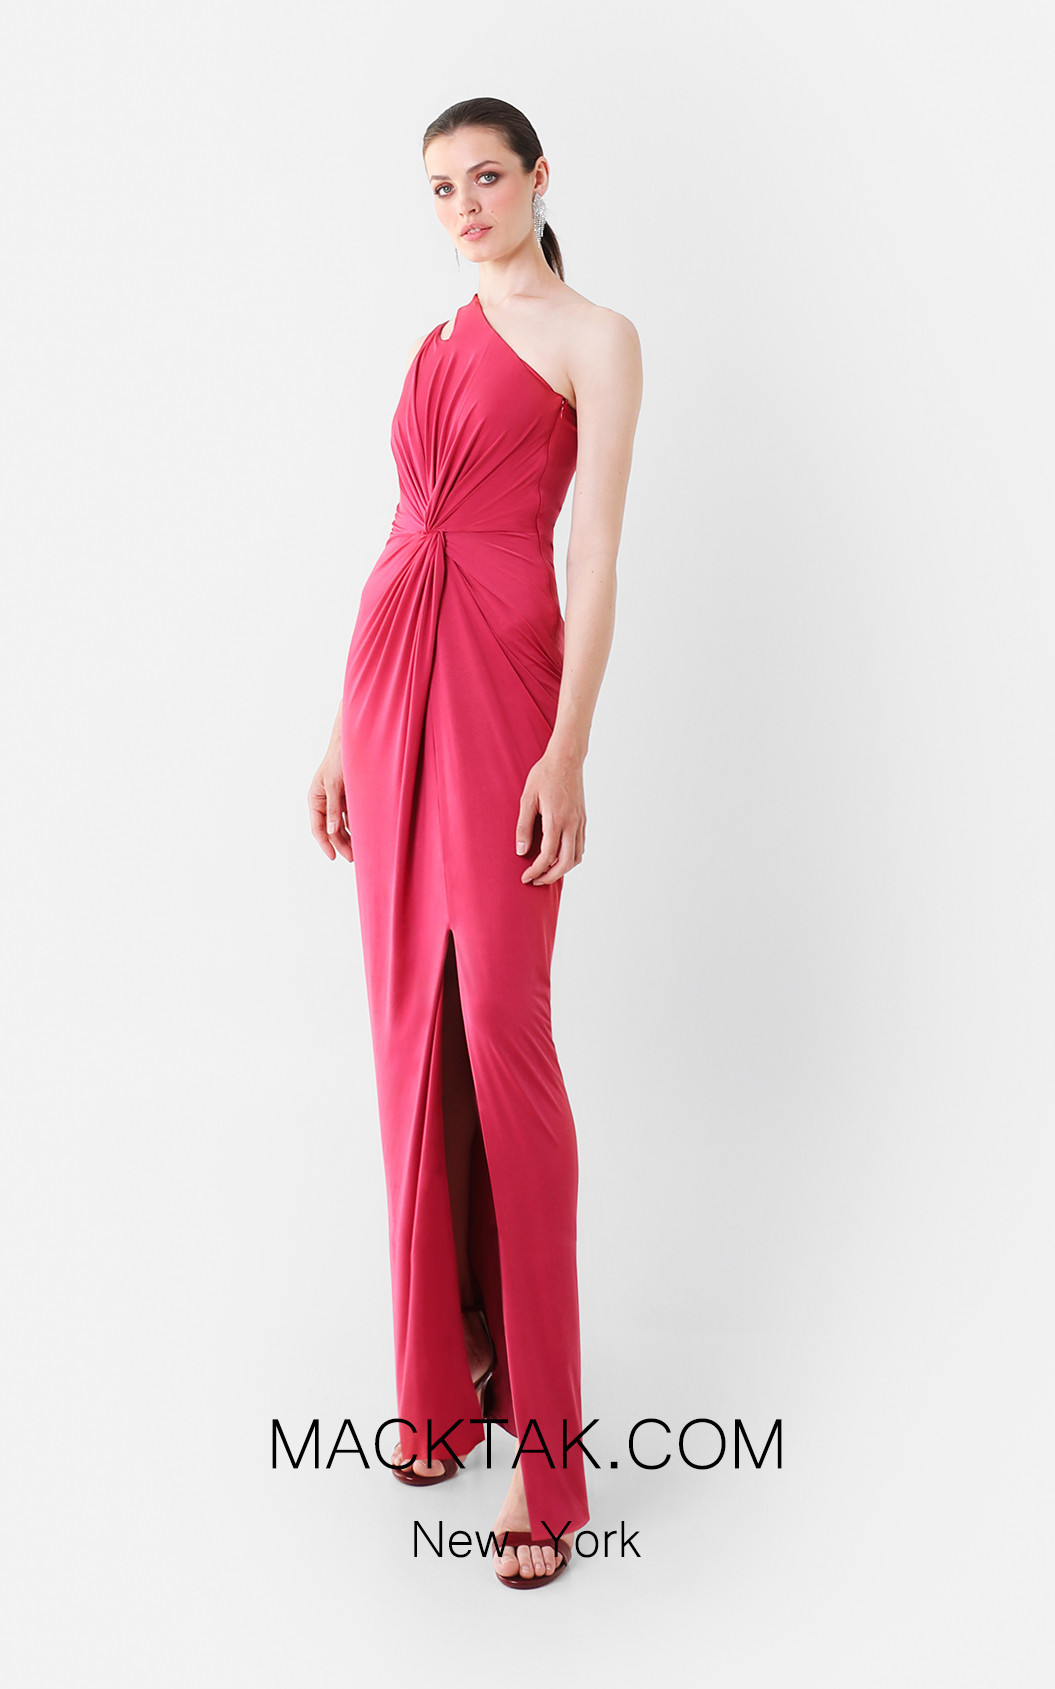 Victoria Jil Strawberry Front Dress